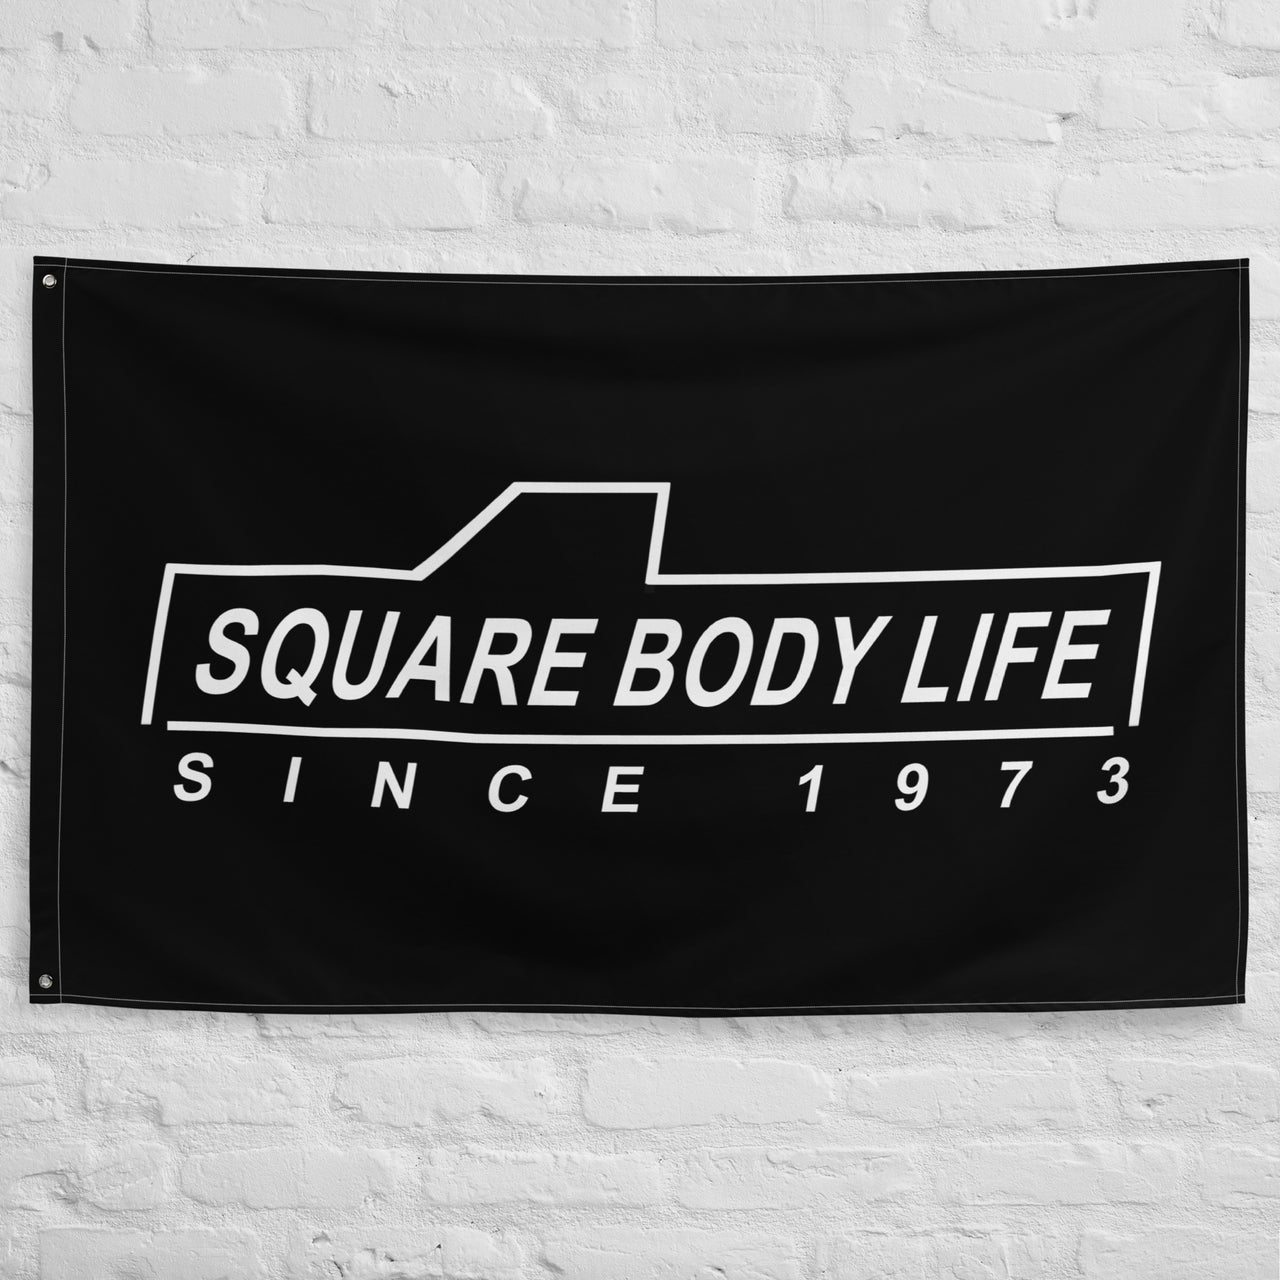 Squarebody Flag - Square Body Life hung on wall